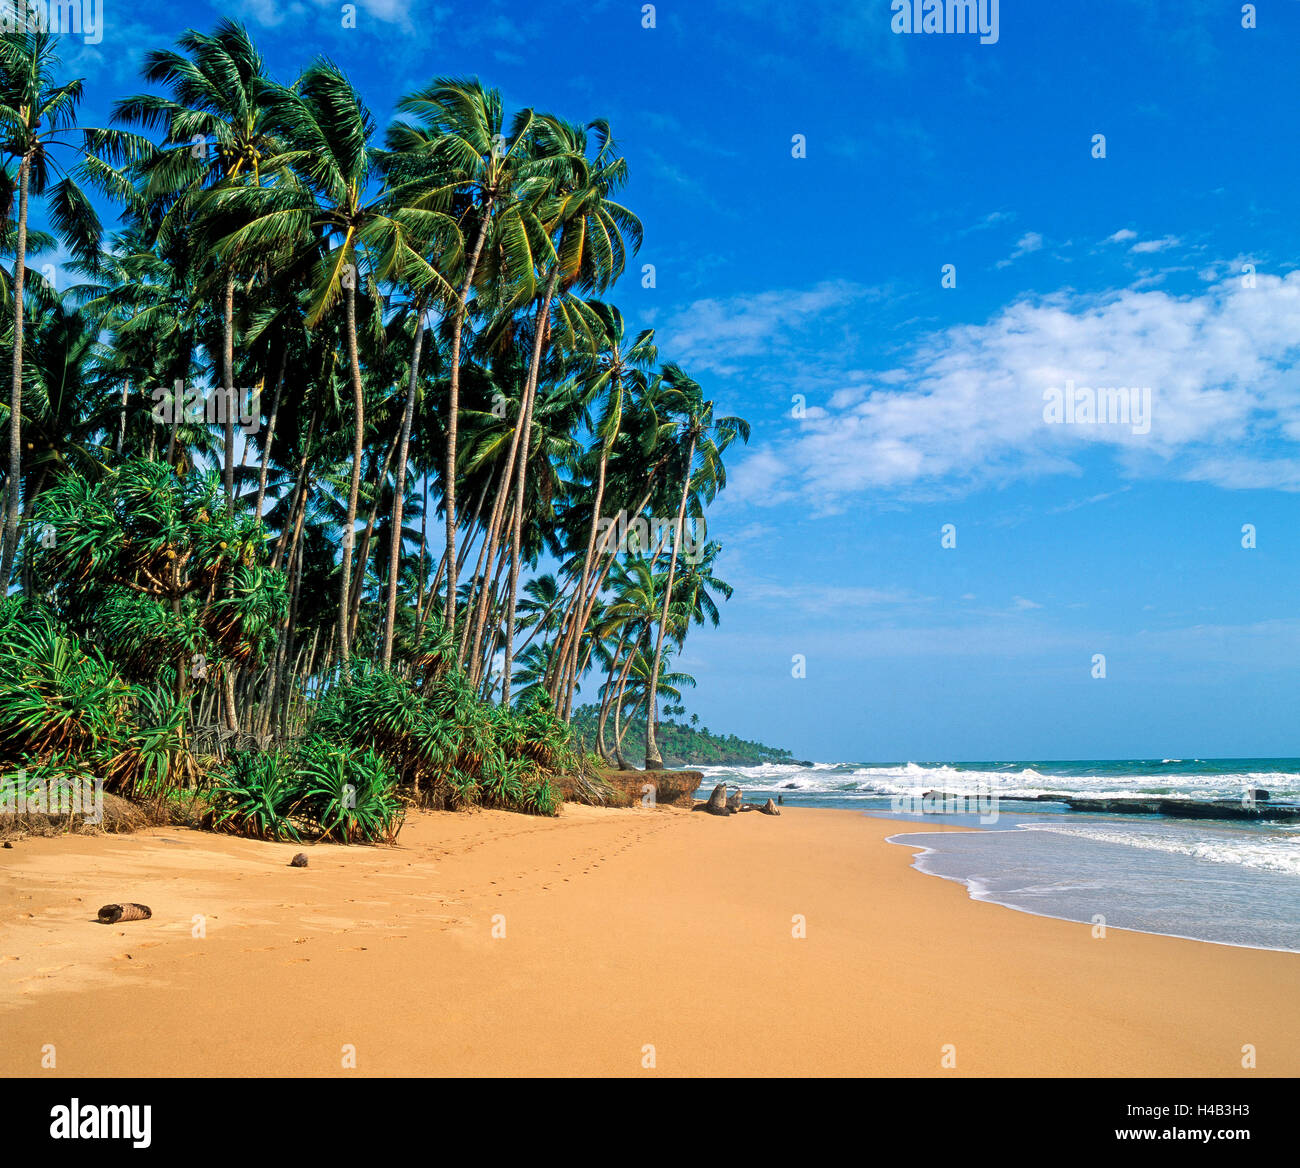 Palm beach, dreamlike sandy beach, Indian Ocean, still undiscovered, holiday paradise Stock Photo